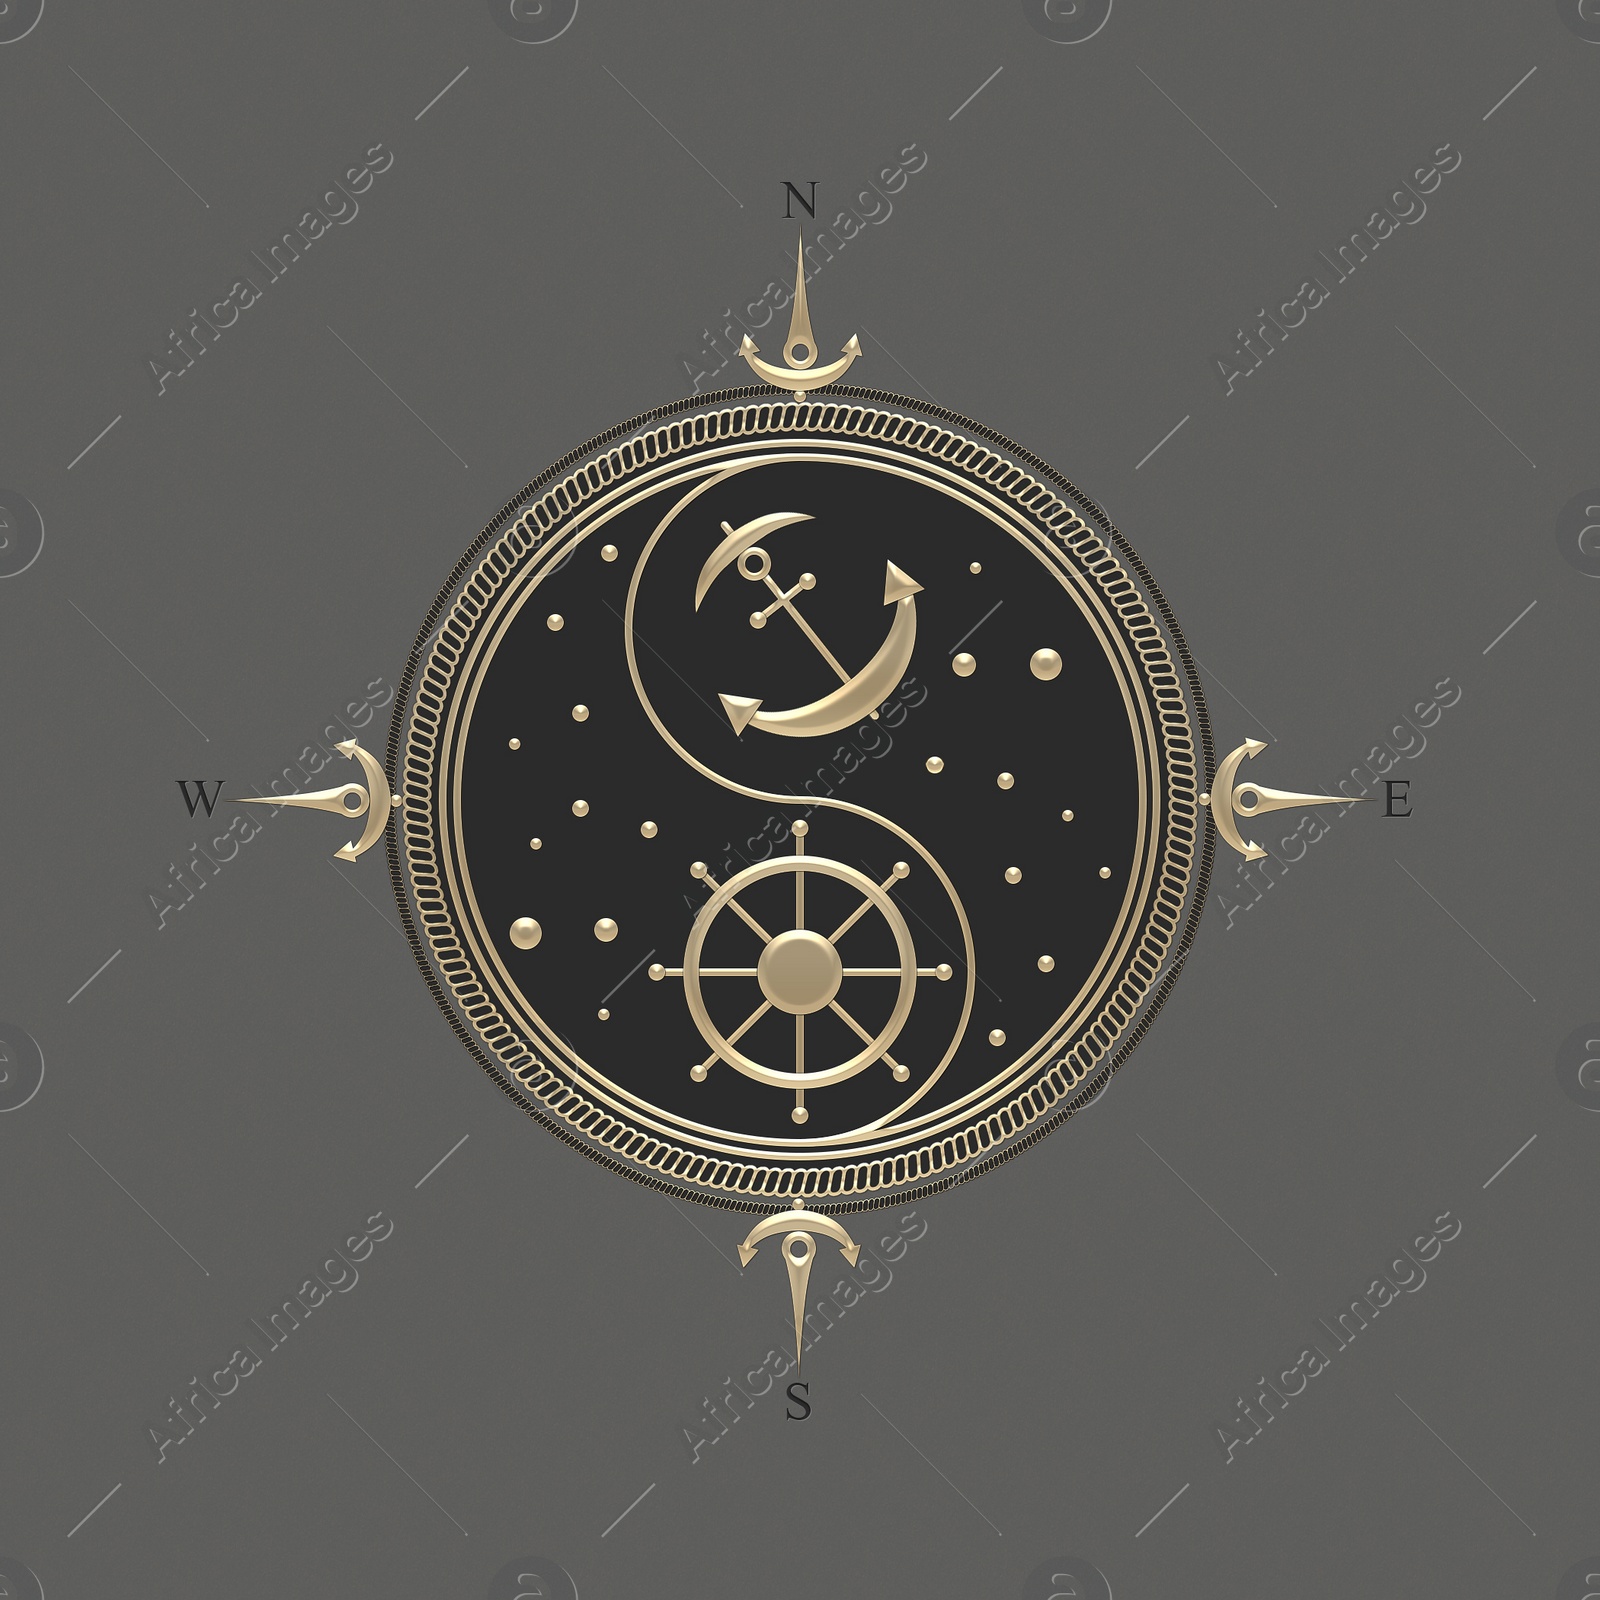 Illustration of  compass rose on grey background